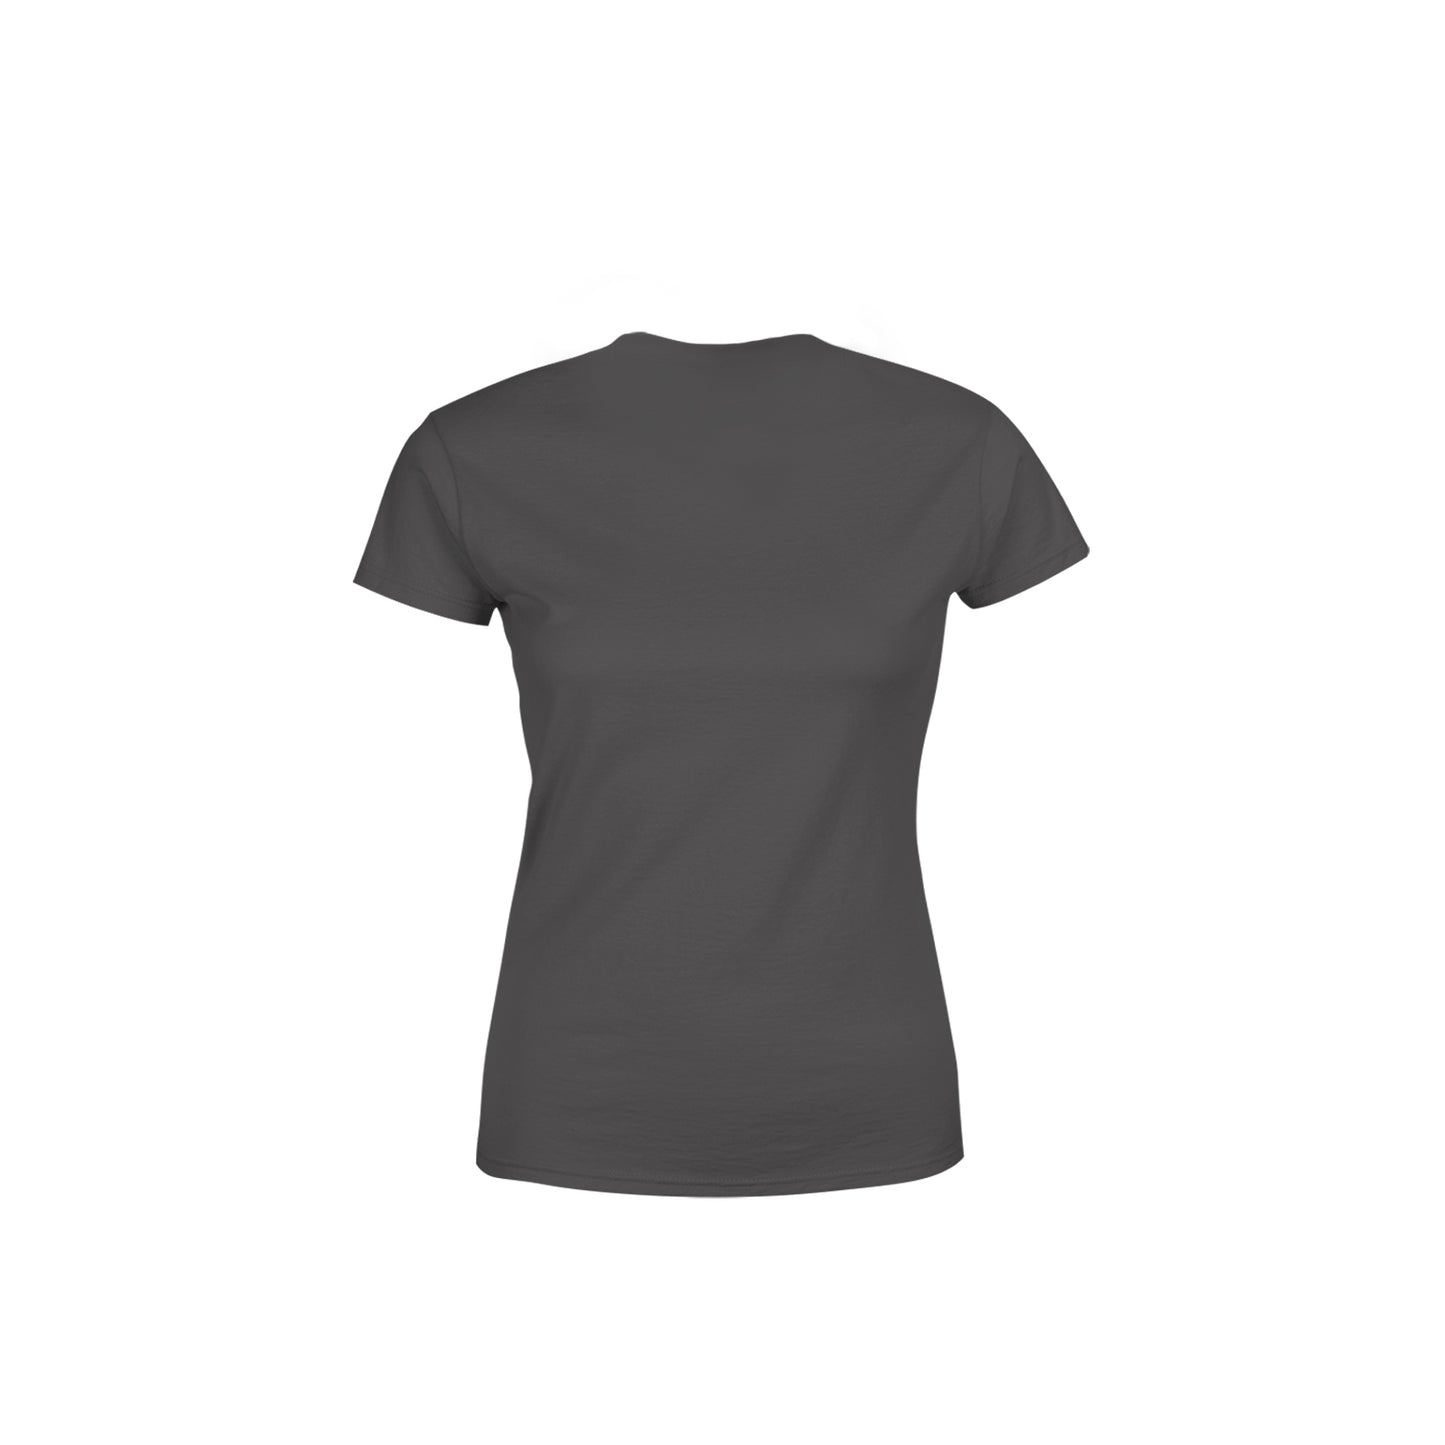 31 Number Women's T-Shirt (Charcoal Grey)